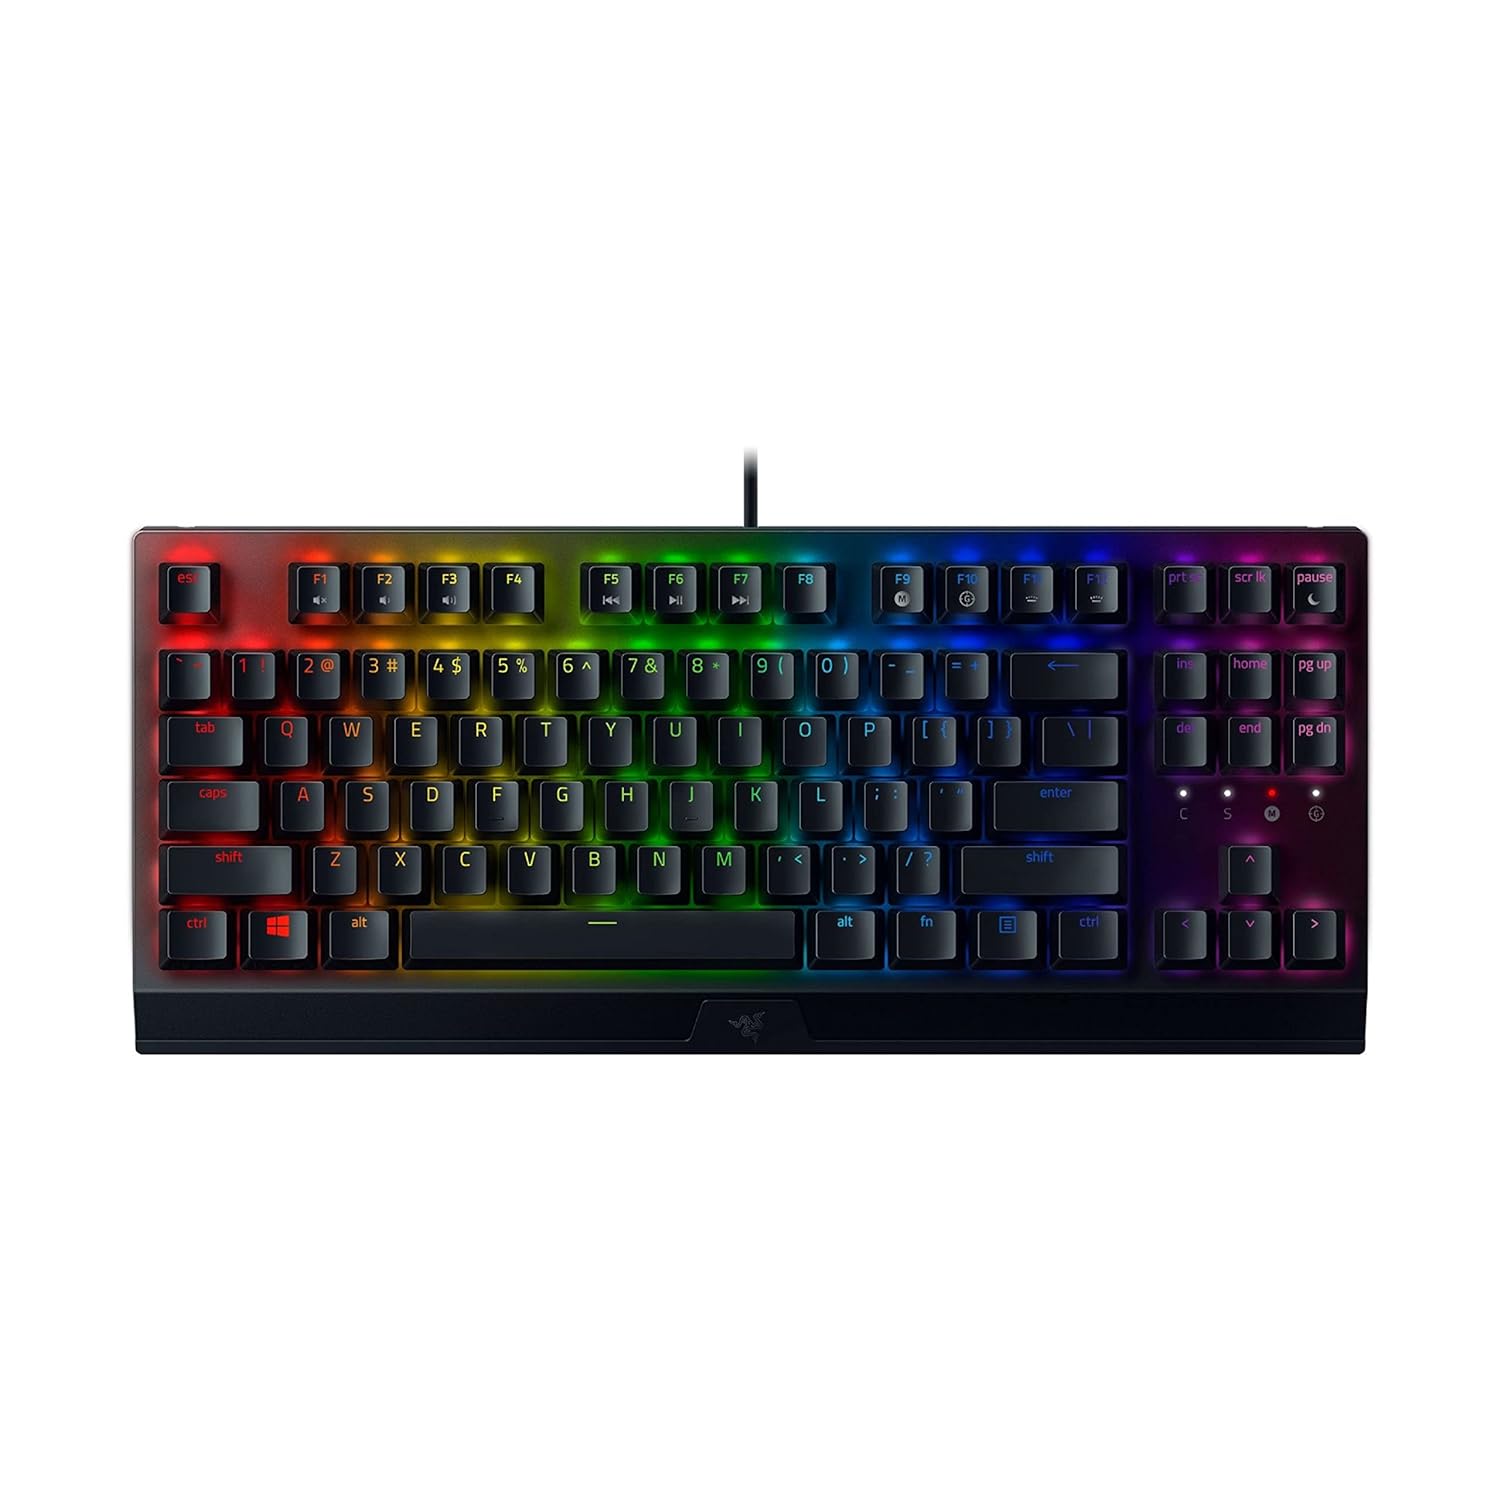 Razer Black Widow V3 Tenkeyless Mechanical Gaming Keyboard Switches - Chroma RGB Lighting - Compact Form Factor - Programmable Macro Functionality - USB Passthrough